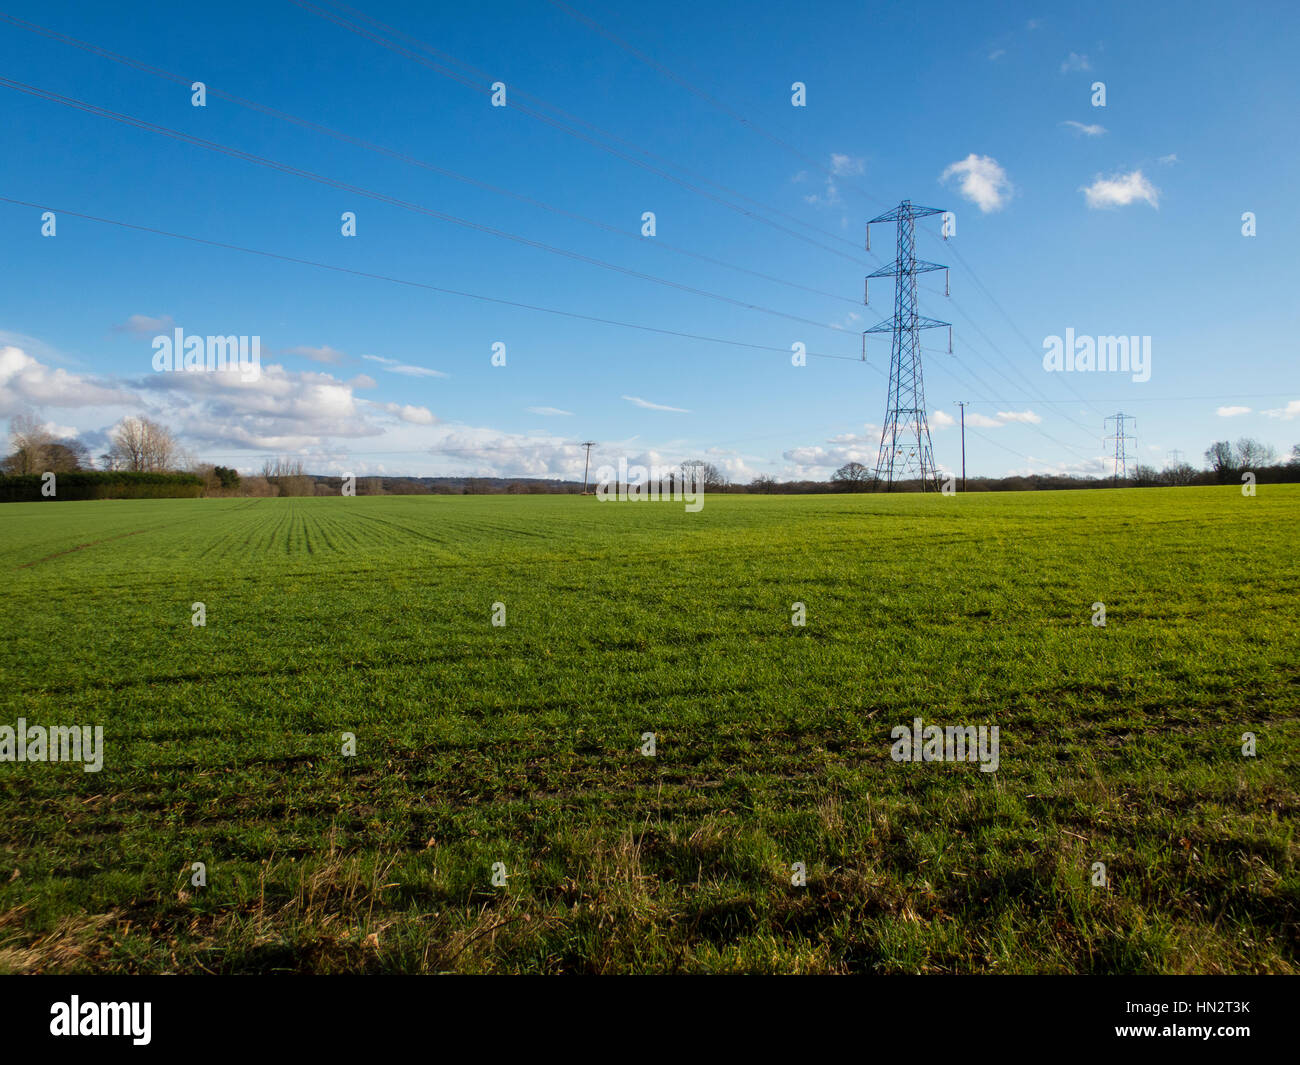 Pylon in green field against a blue sky Stock Photo